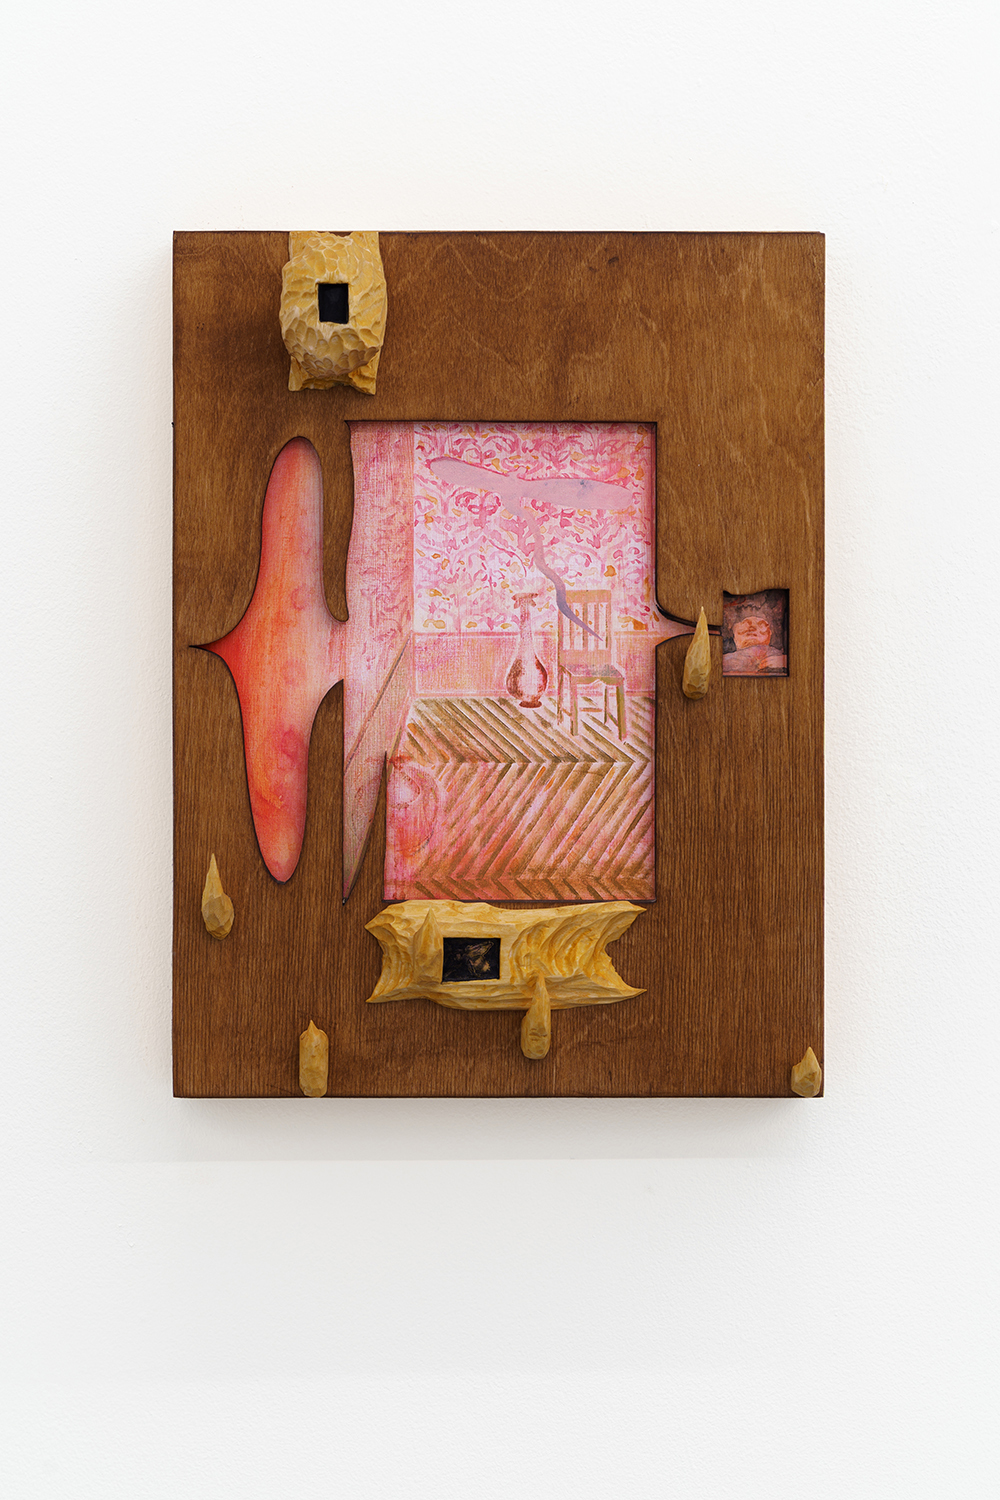 ‘Hot Pollen’, 2022, linden, acrylic, plywood, 40x30 cm